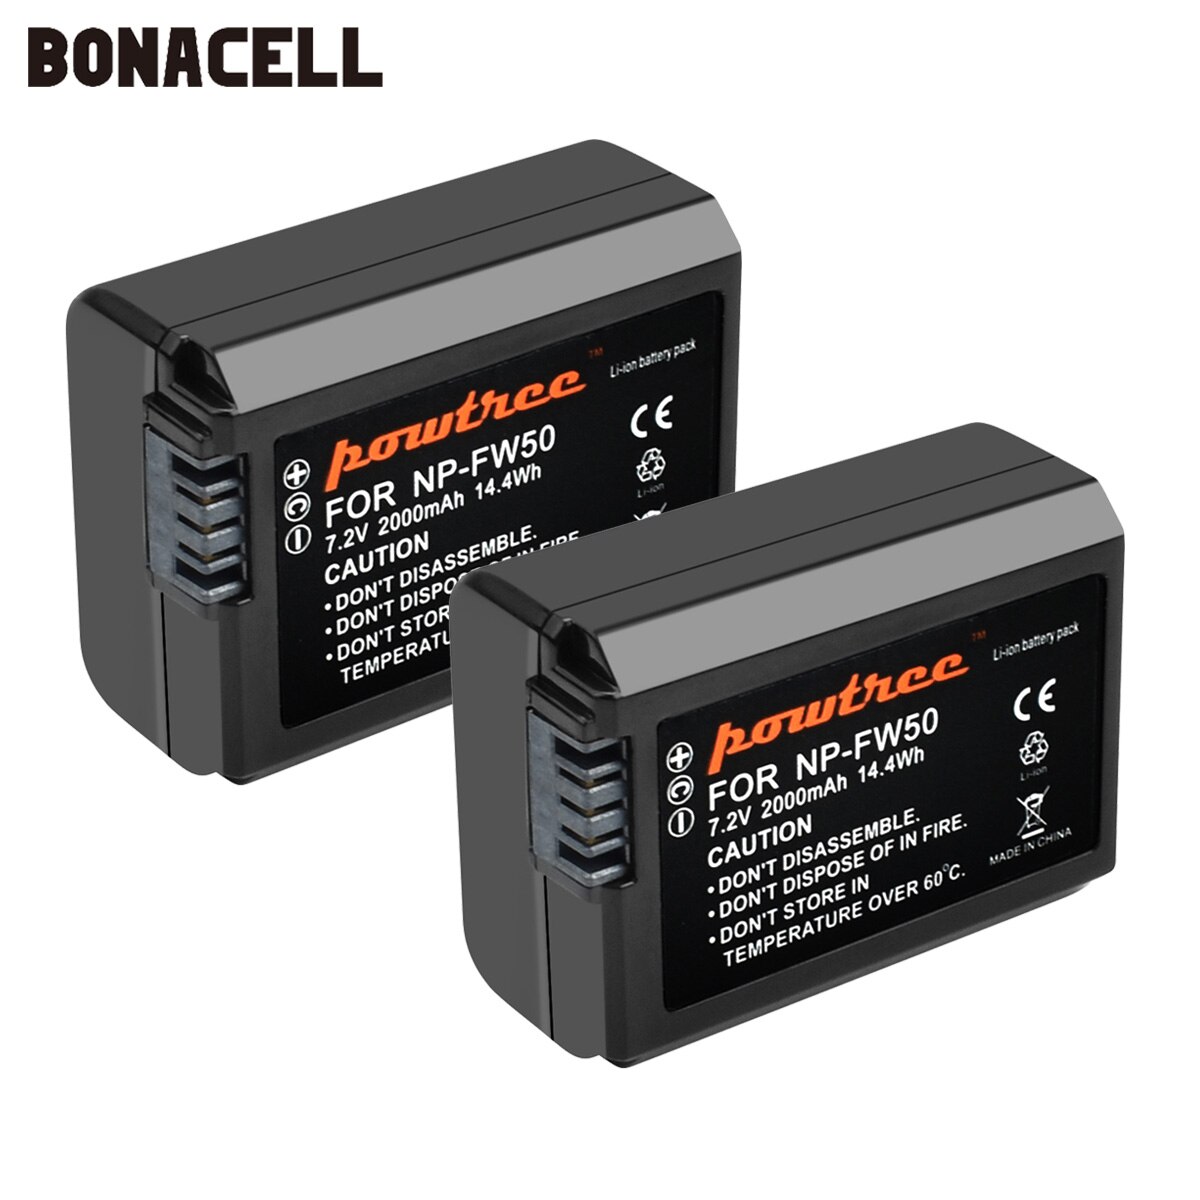 Bonacell 2000mah NP-FW50 NP FW50 batería AKKU para Sony NEX-7 NEX-5N NEX-5R NEX-F3 NEX-3D alfa a5000 a6000 DSC-RX10 Alpha 7 a7II: 2 Pack Battery